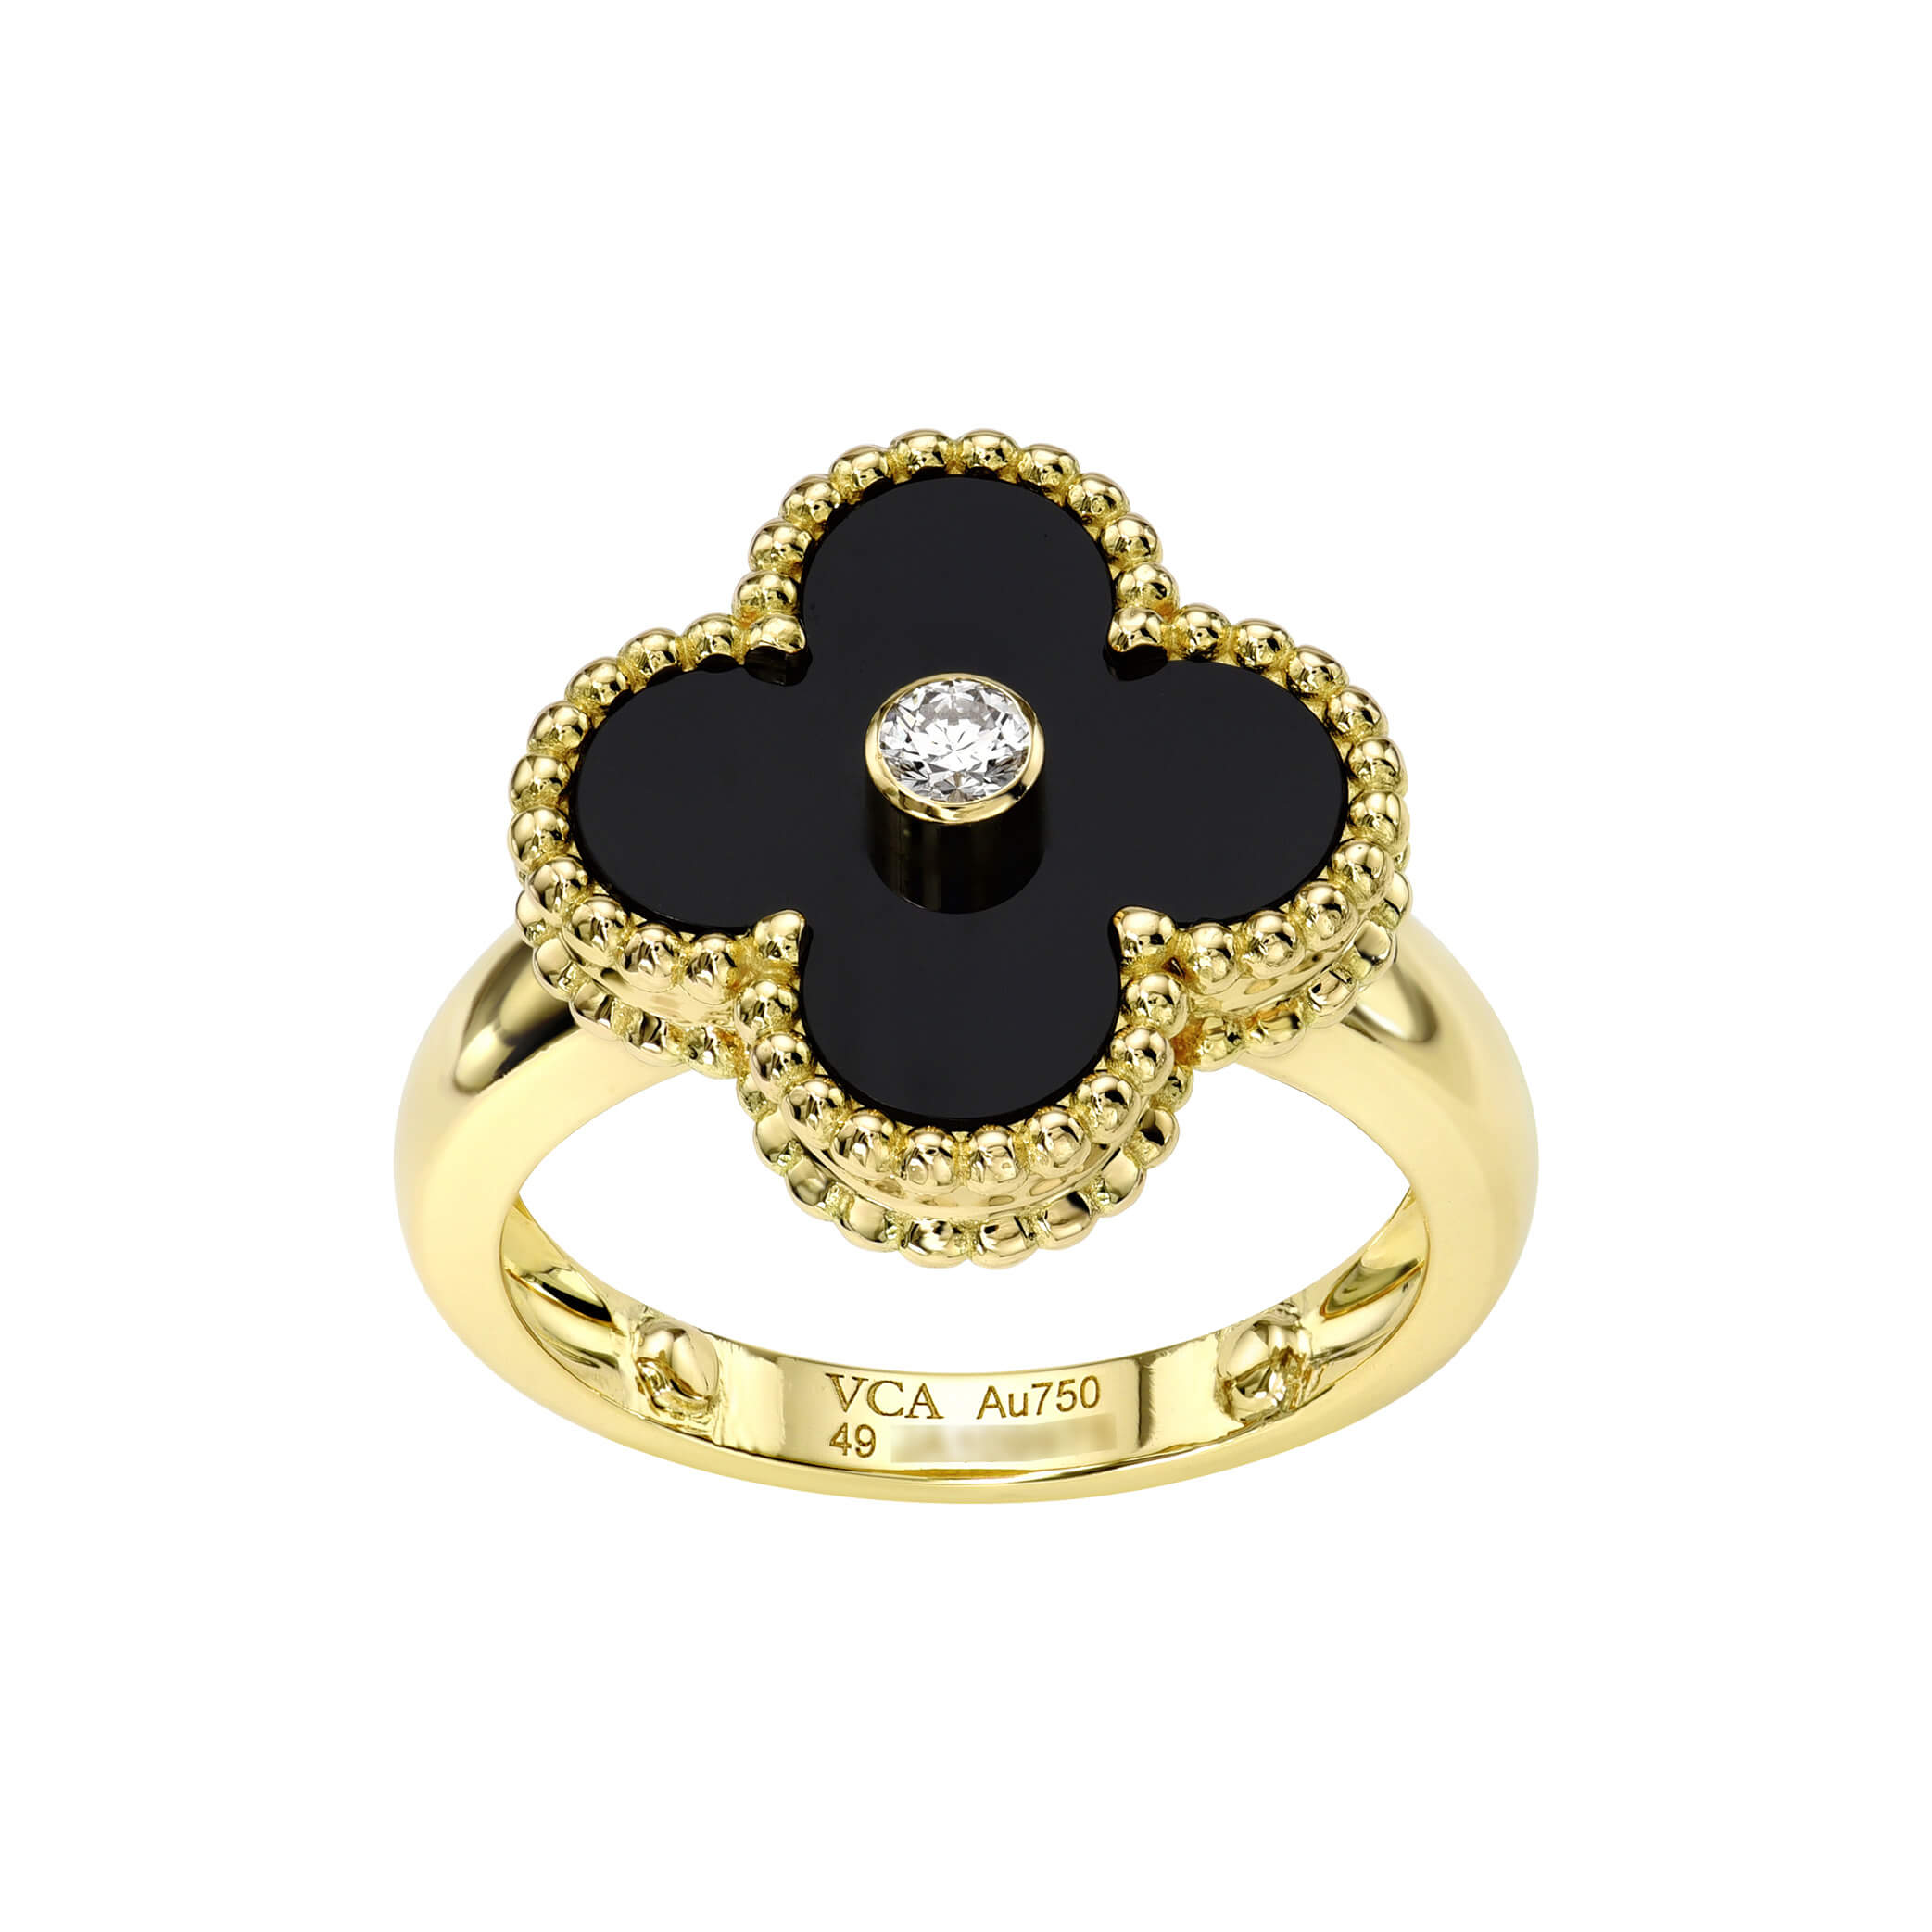 Vintage Alhambra ring 18K yellow gold, Diamond, Onyx - Van Cleef & Arpels